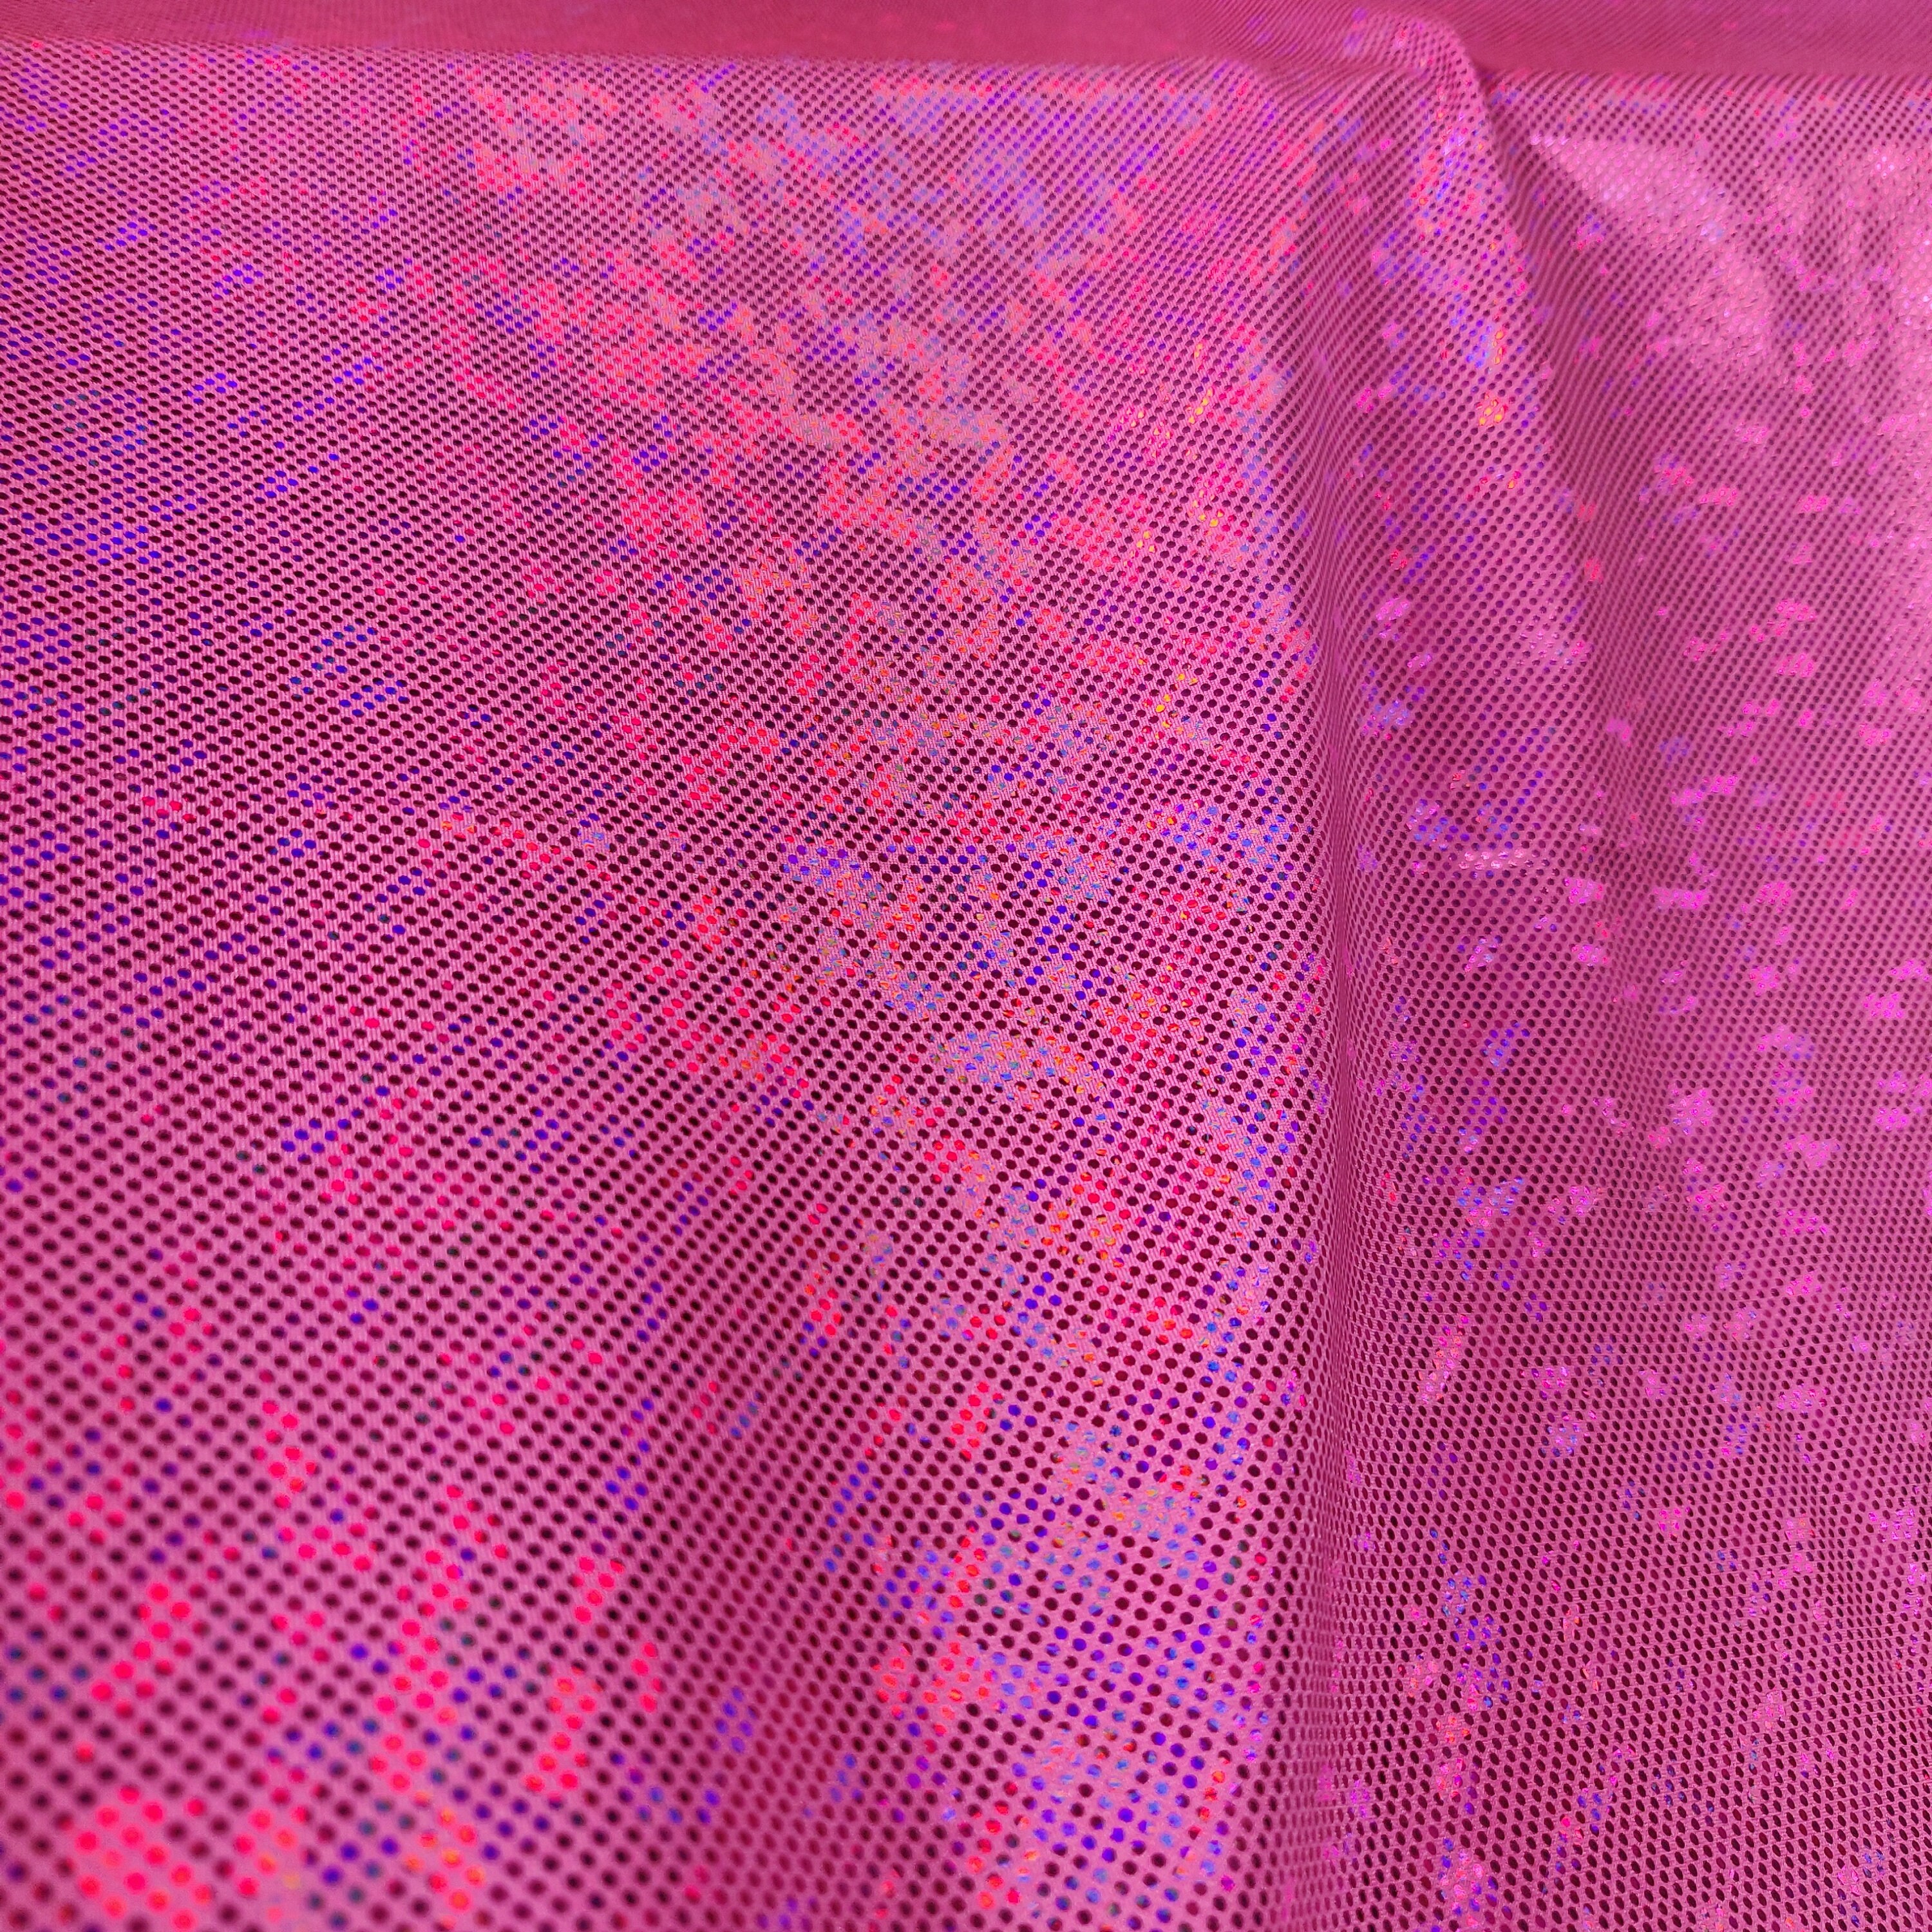 FabricLA Shattered Glass Nylon Spandex Fabric - 4 Way Stretch Fabric -  Thick Spandex Fabric by The Yard - Hologram Pattern 